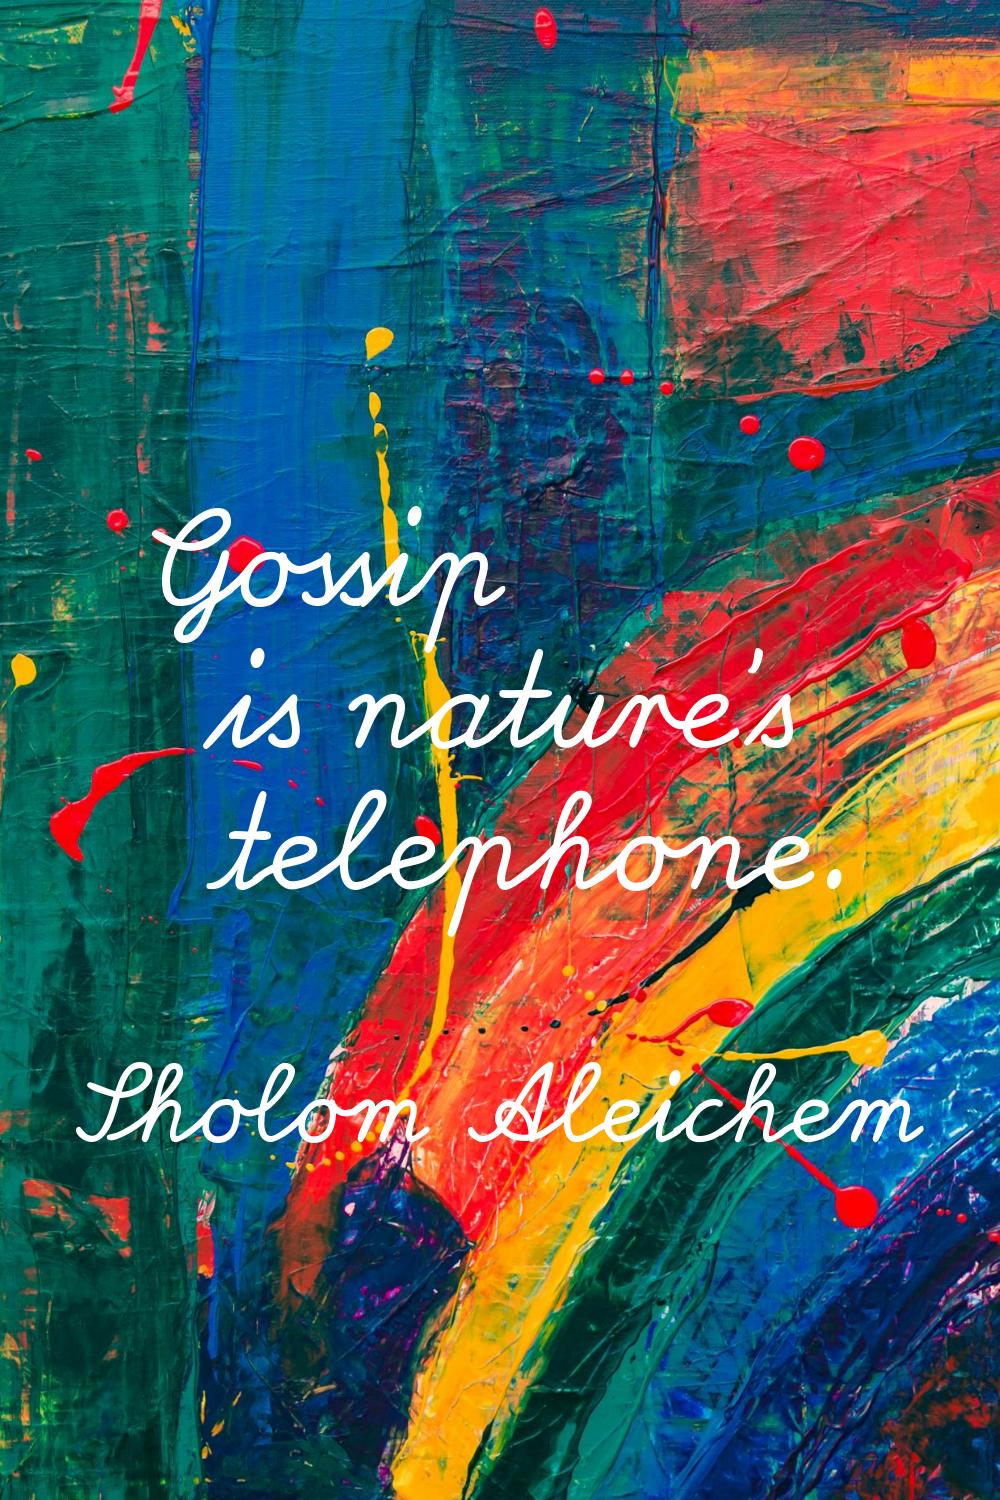 Gossip is nature's telephone.